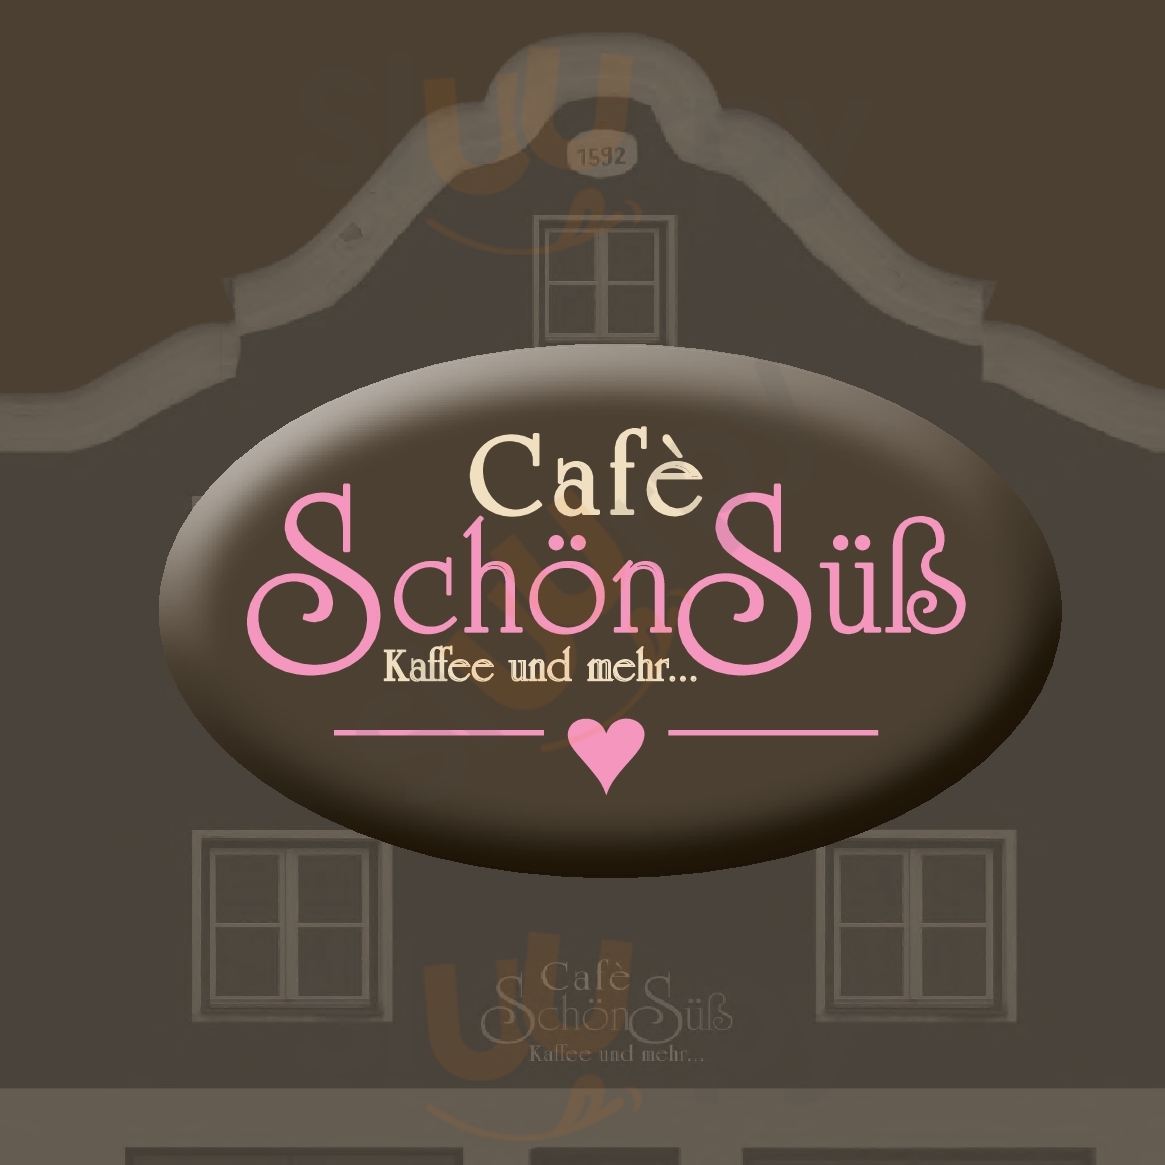 Cafe Schönsüß Geisenhausen Menu - 1